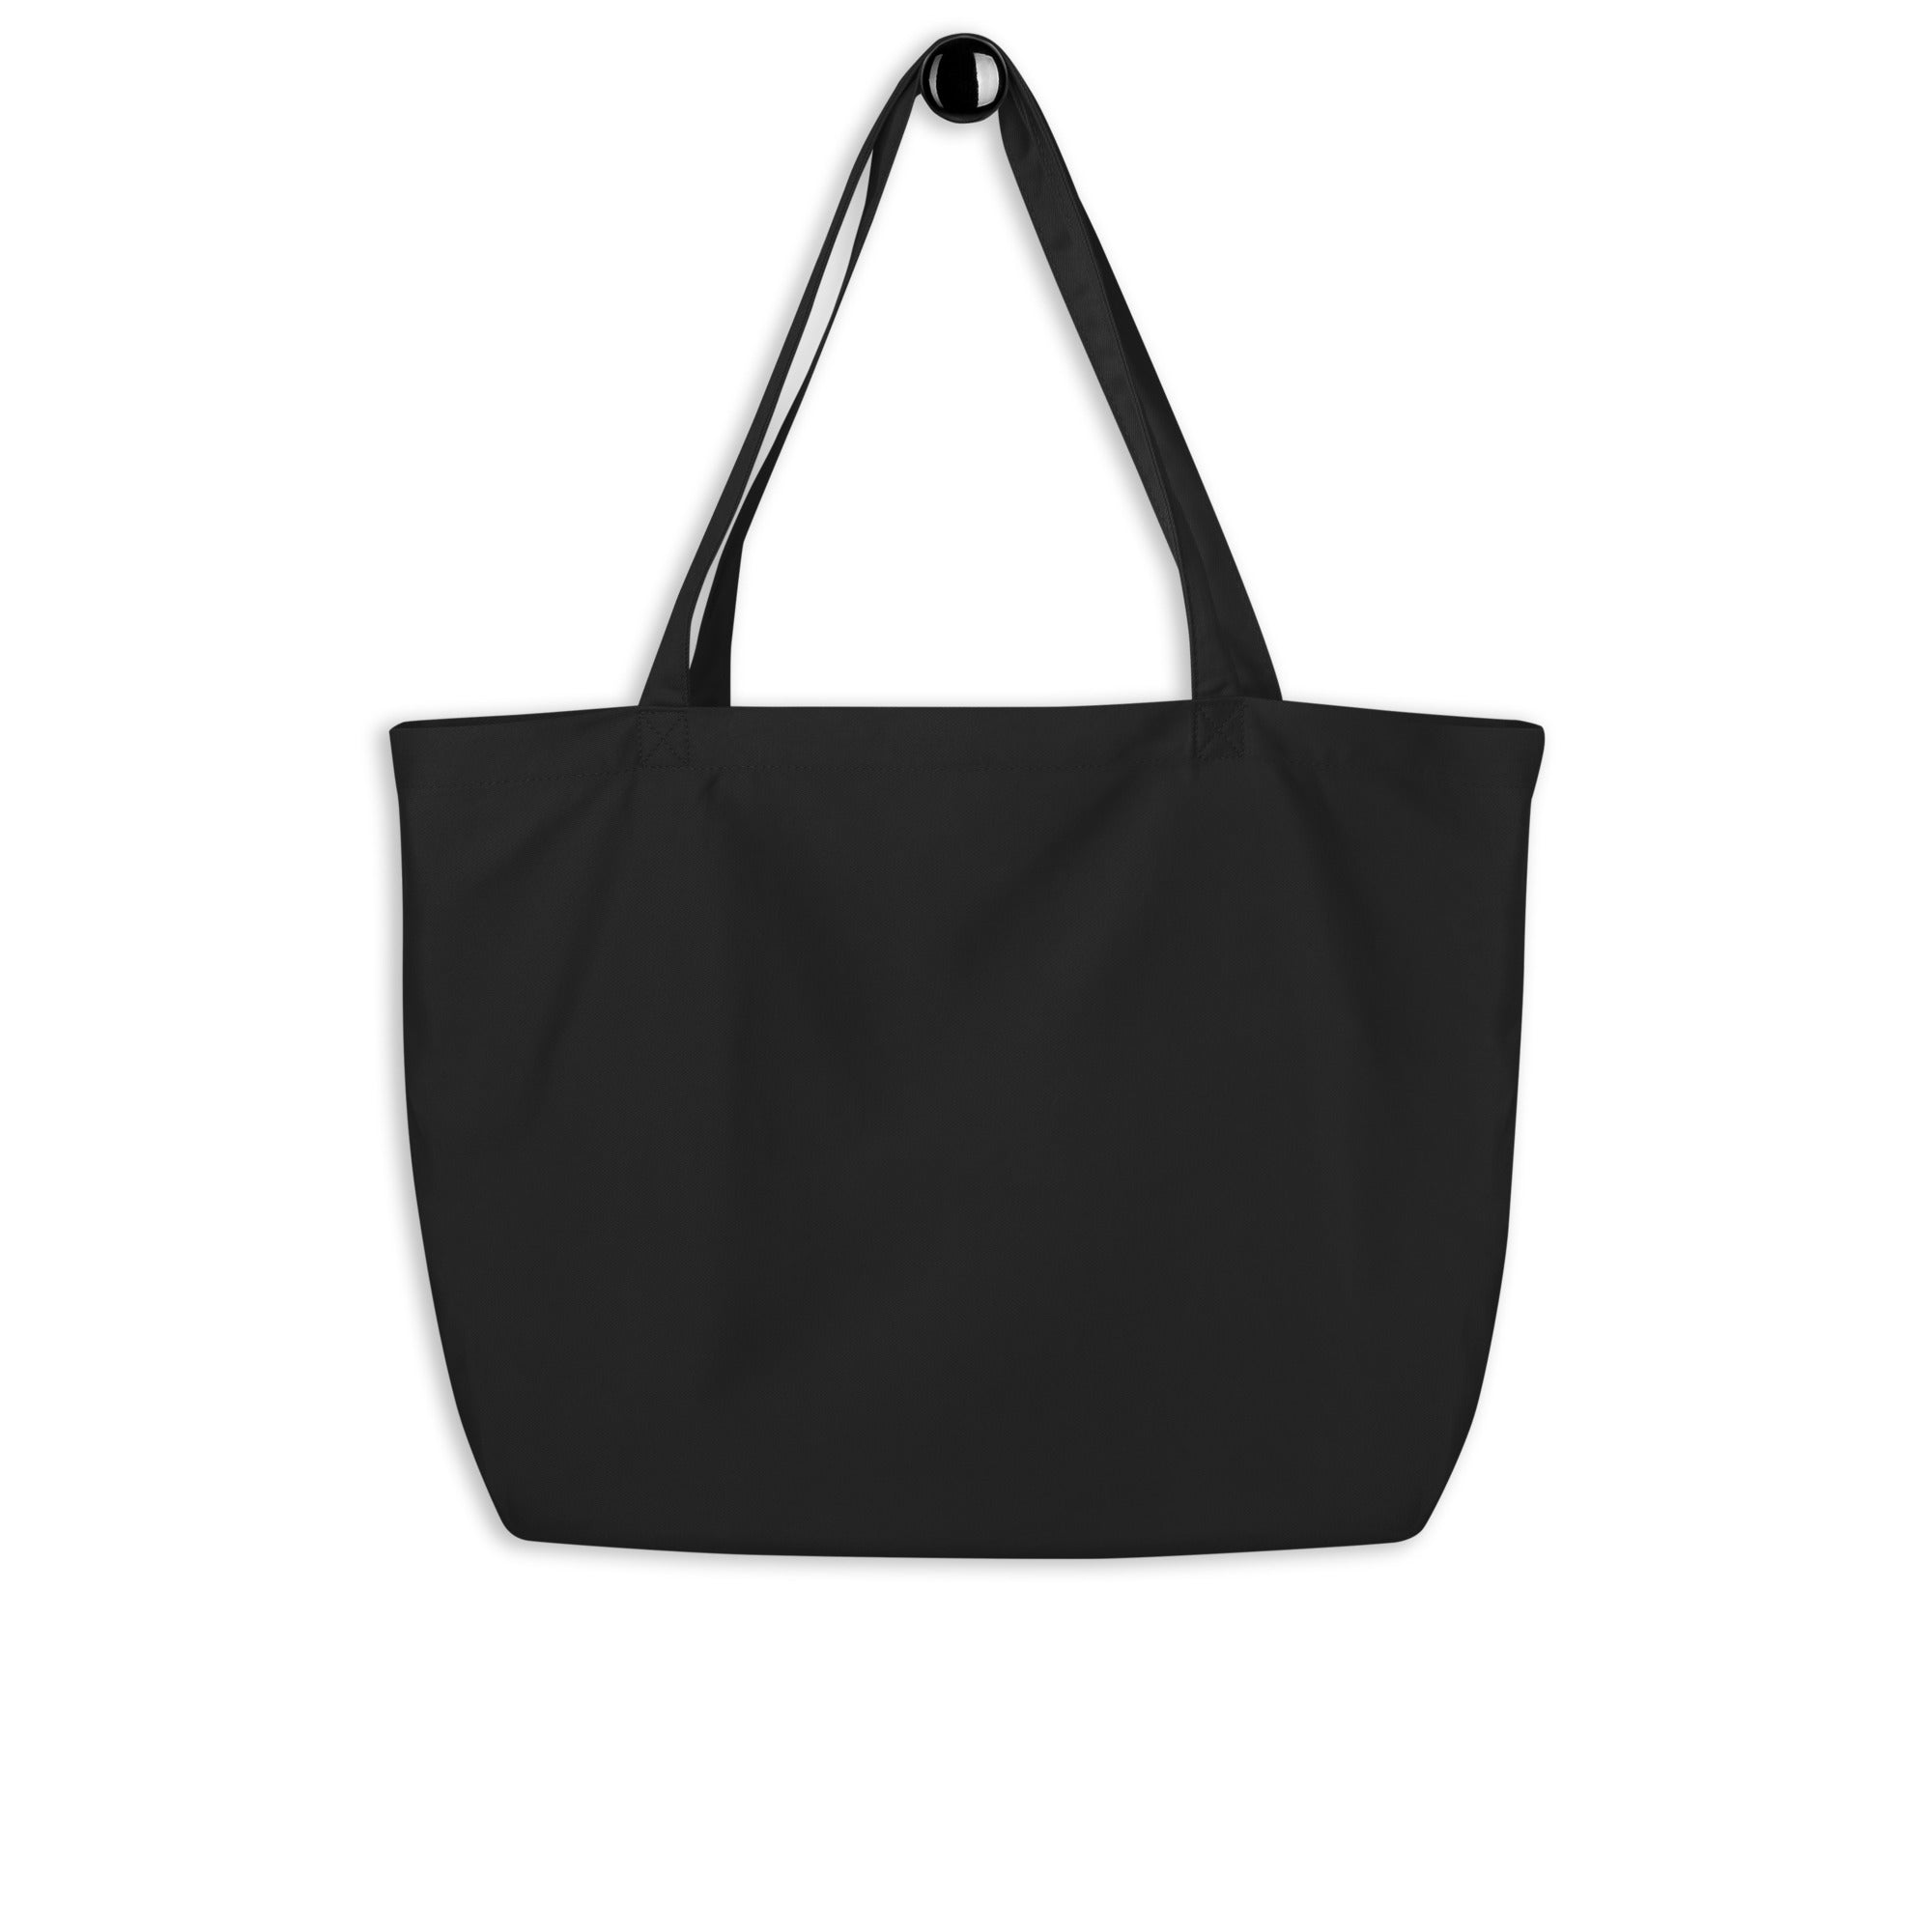 Legacy Black Large organic tote bag